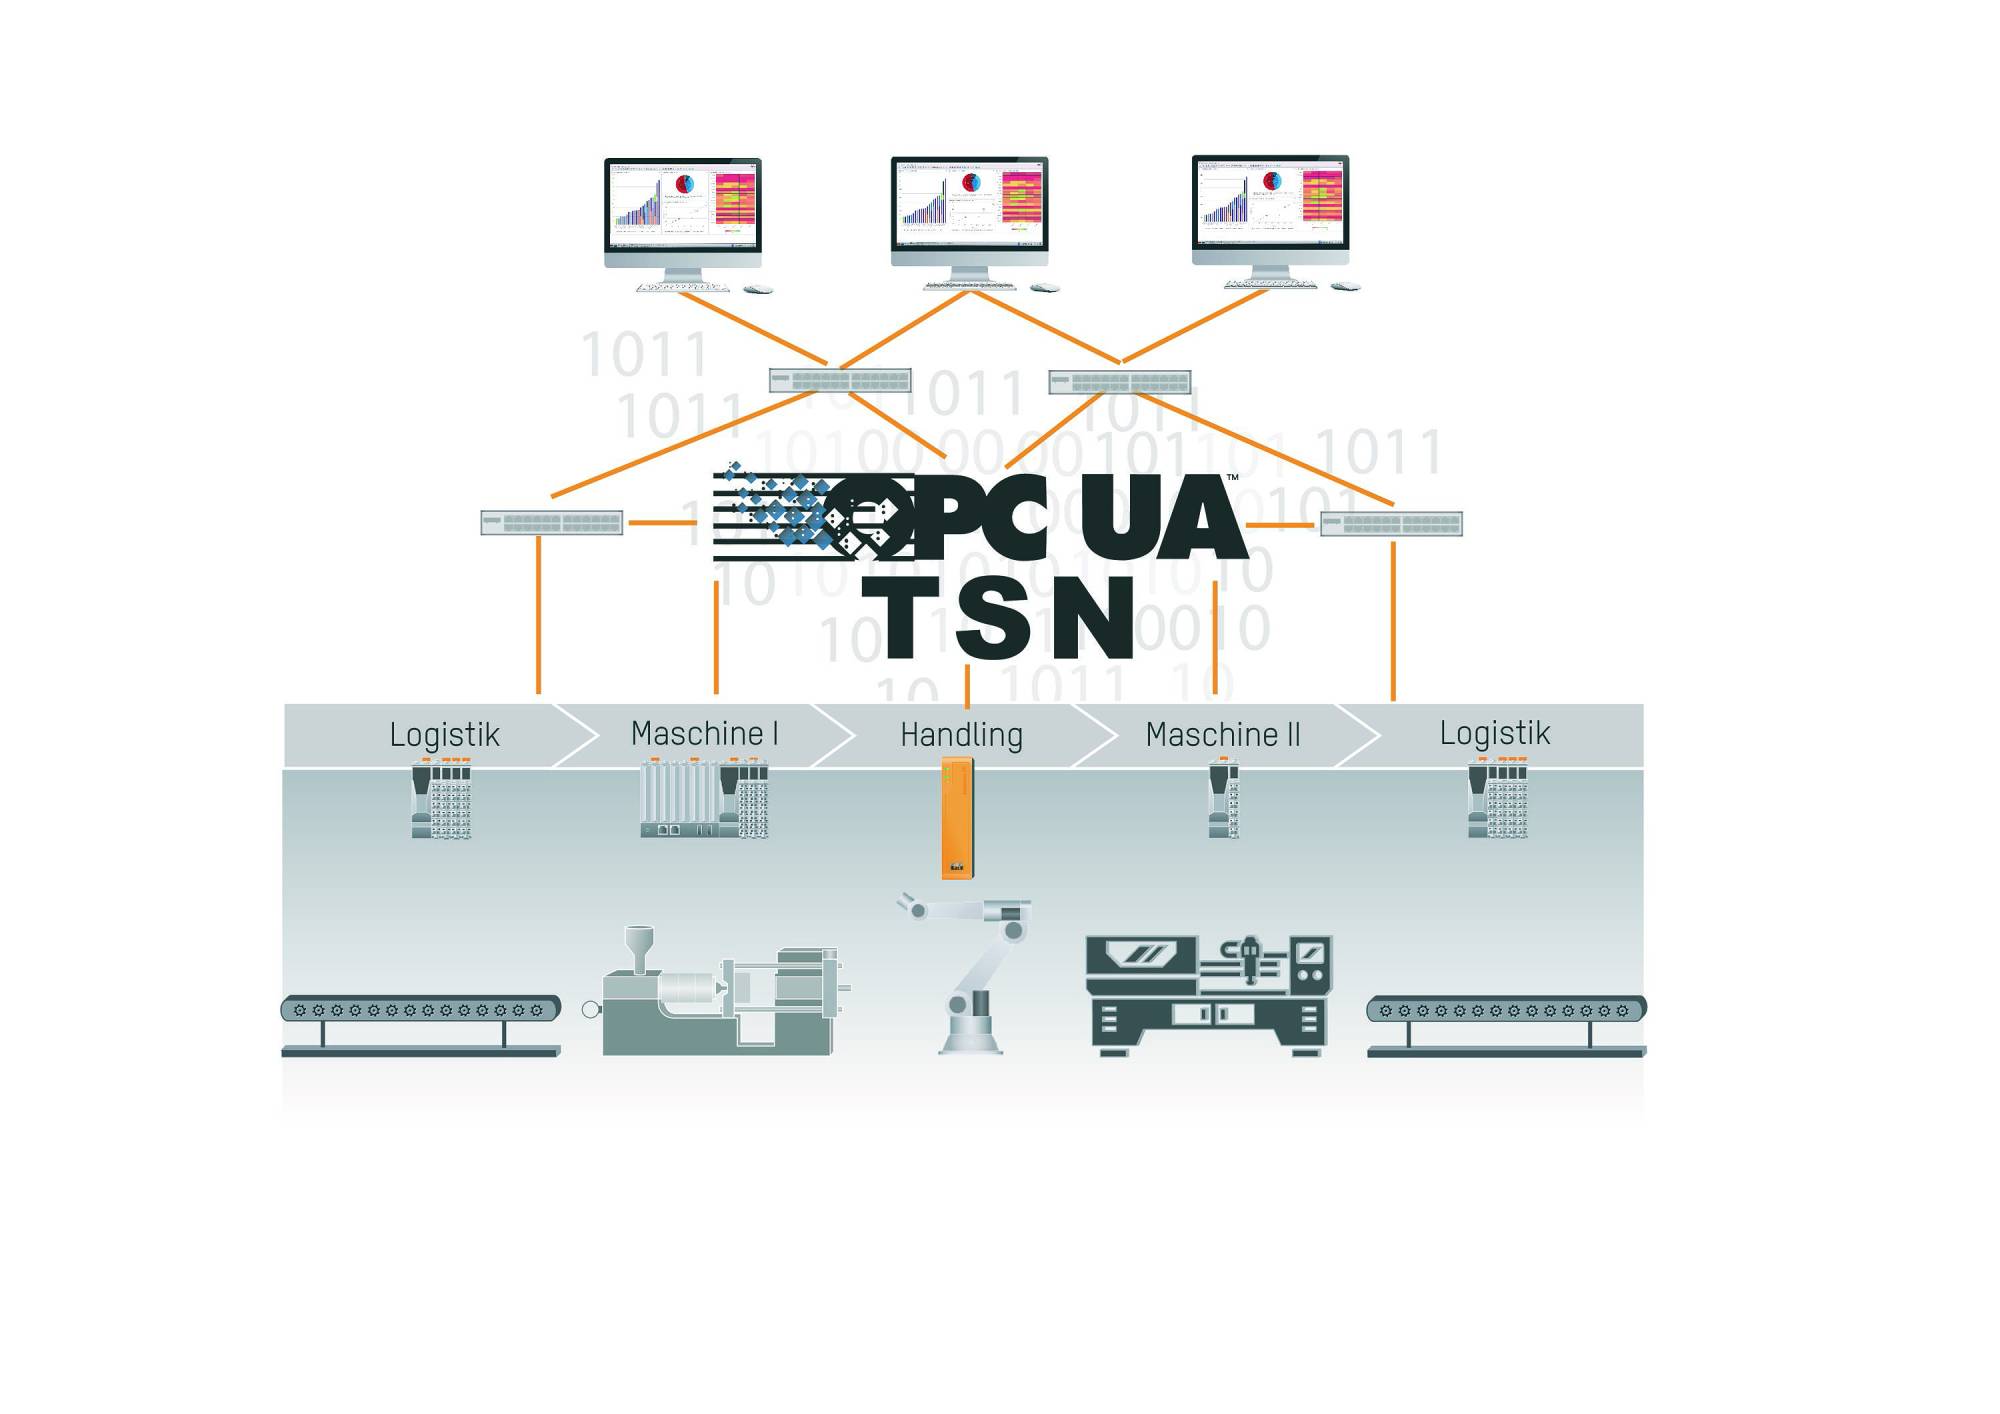 OPC UA TSN, Ethernet Powerlink, Shapers Group, X20-Buscontroller